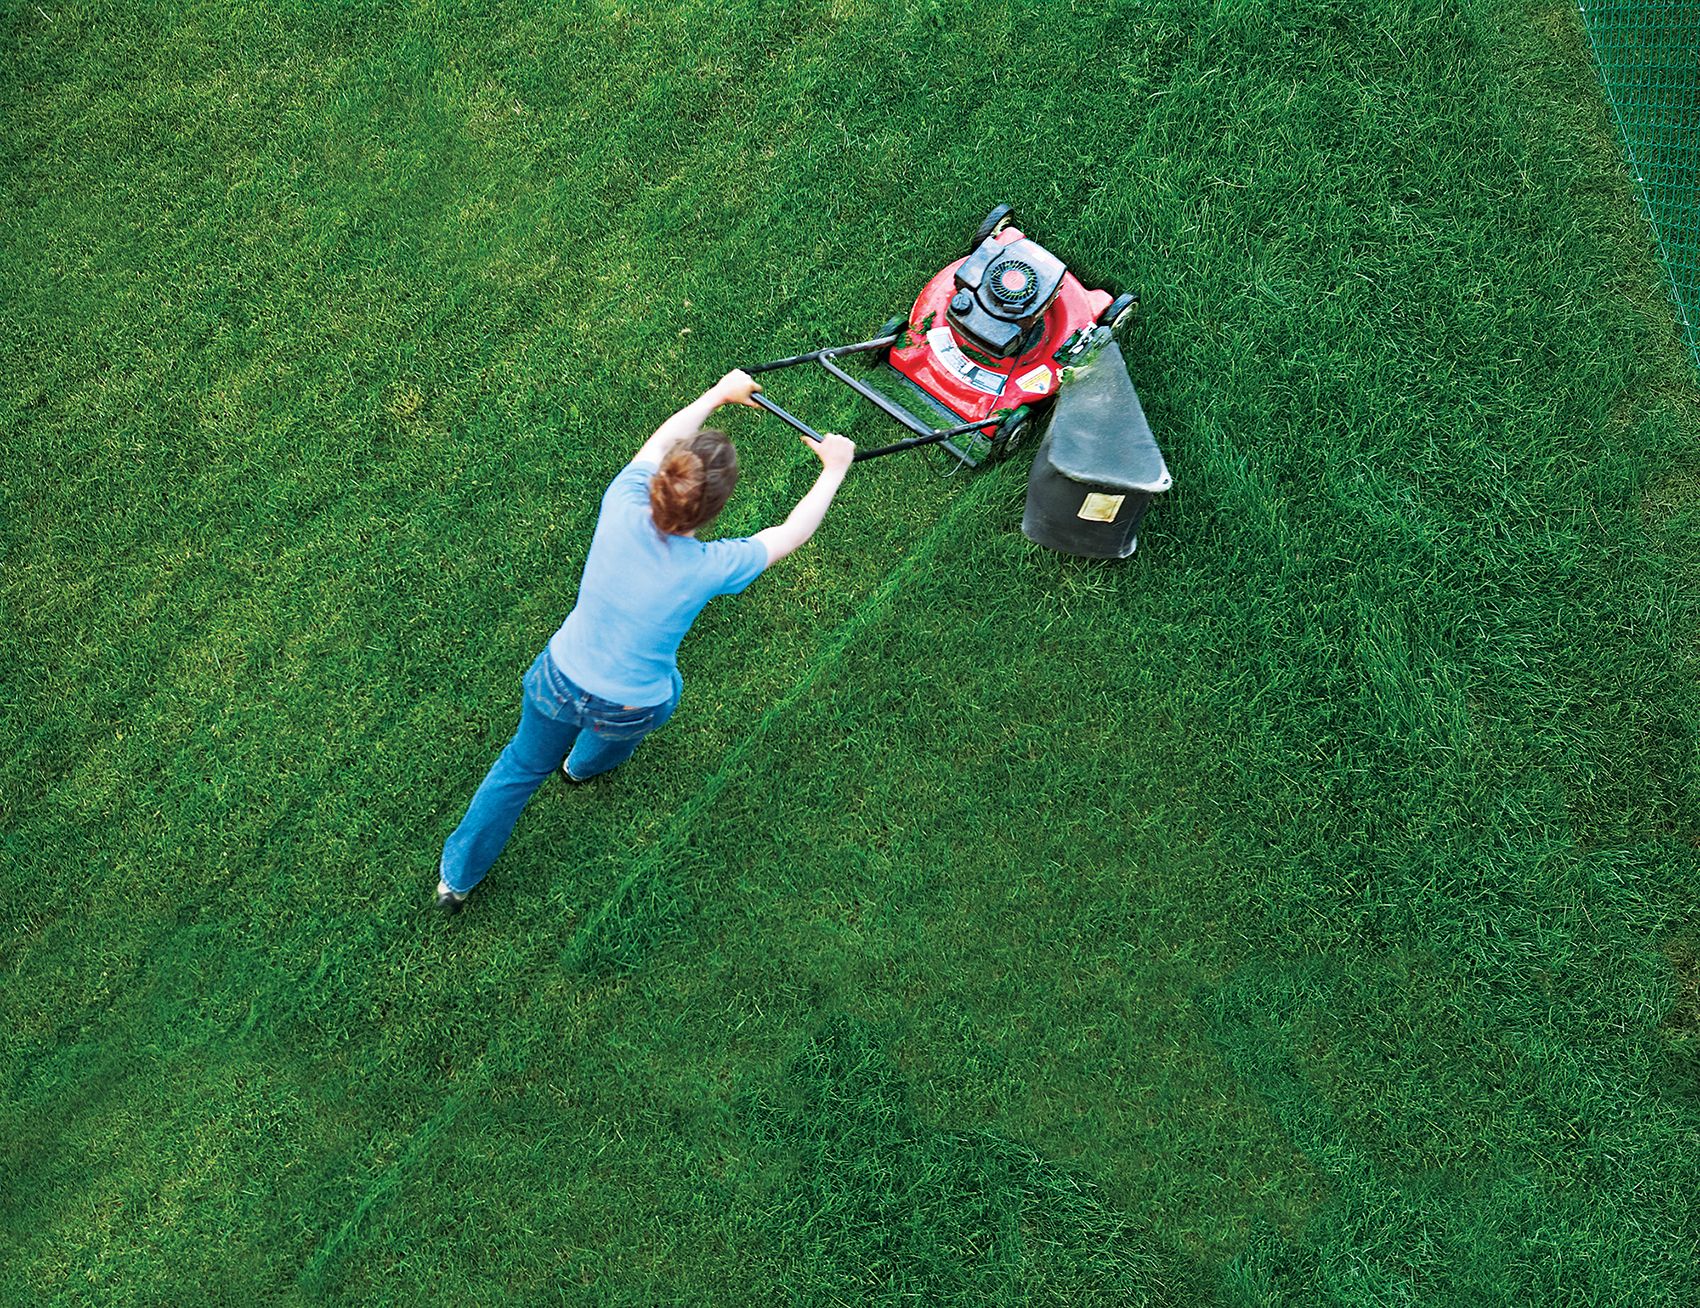 Fiskars Momentum: The Eco-Friendly Push Reel Lawn Mower 